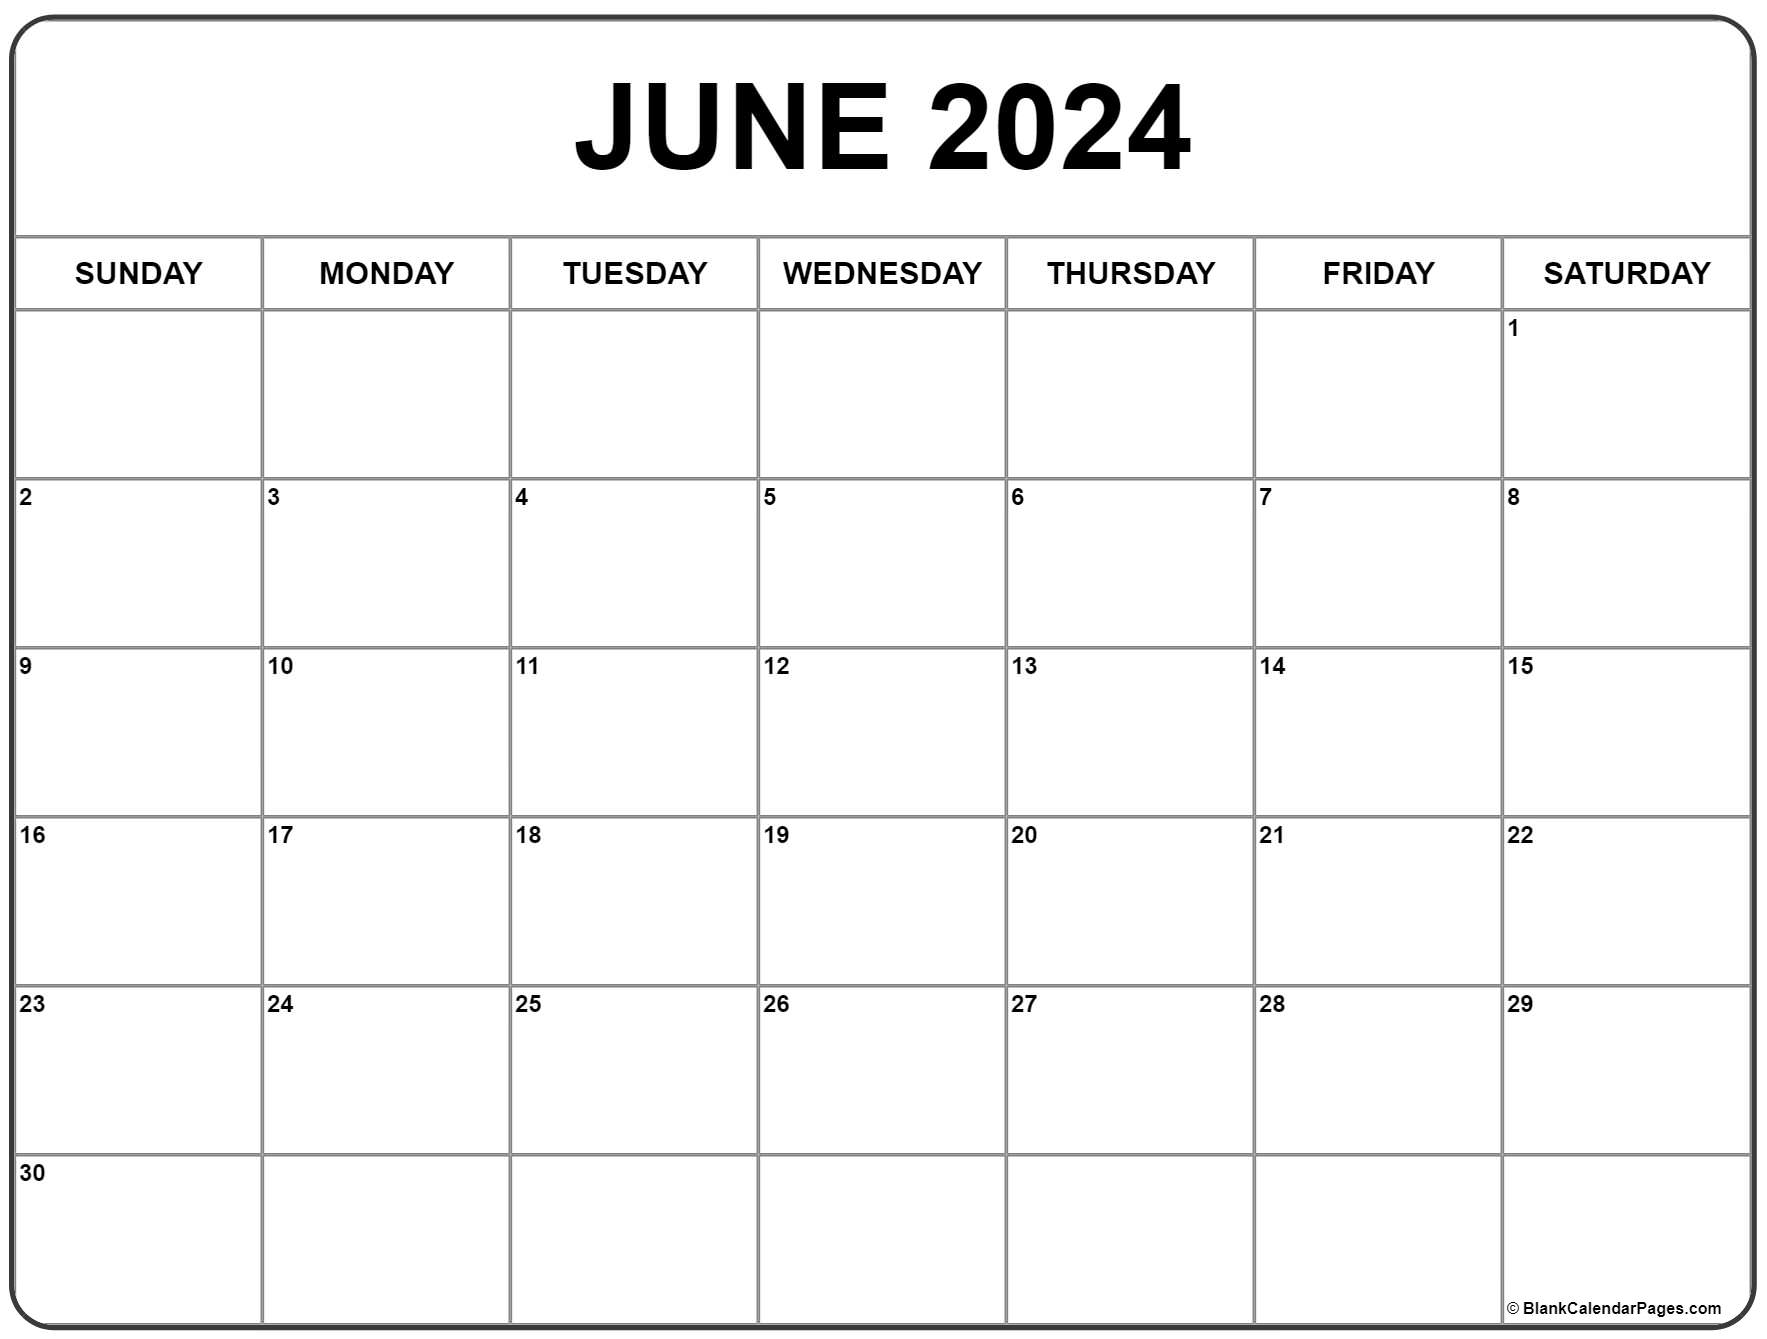 June 2024 Calendar | Free Printable Calendar for Free Calendar June 2024 Printable